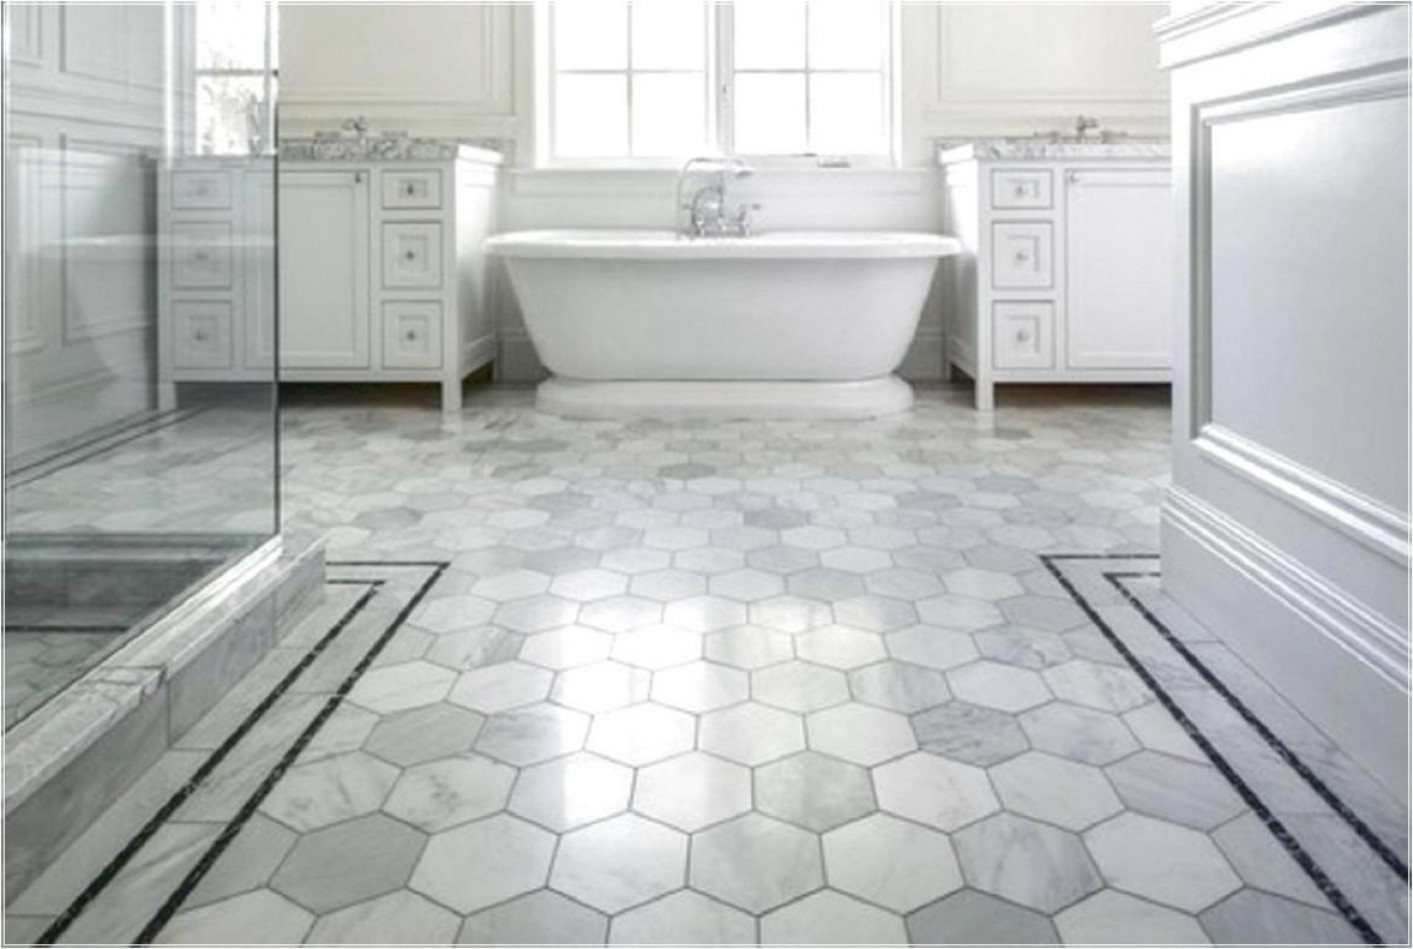 bathroom tile floor designs pictures photo - 3